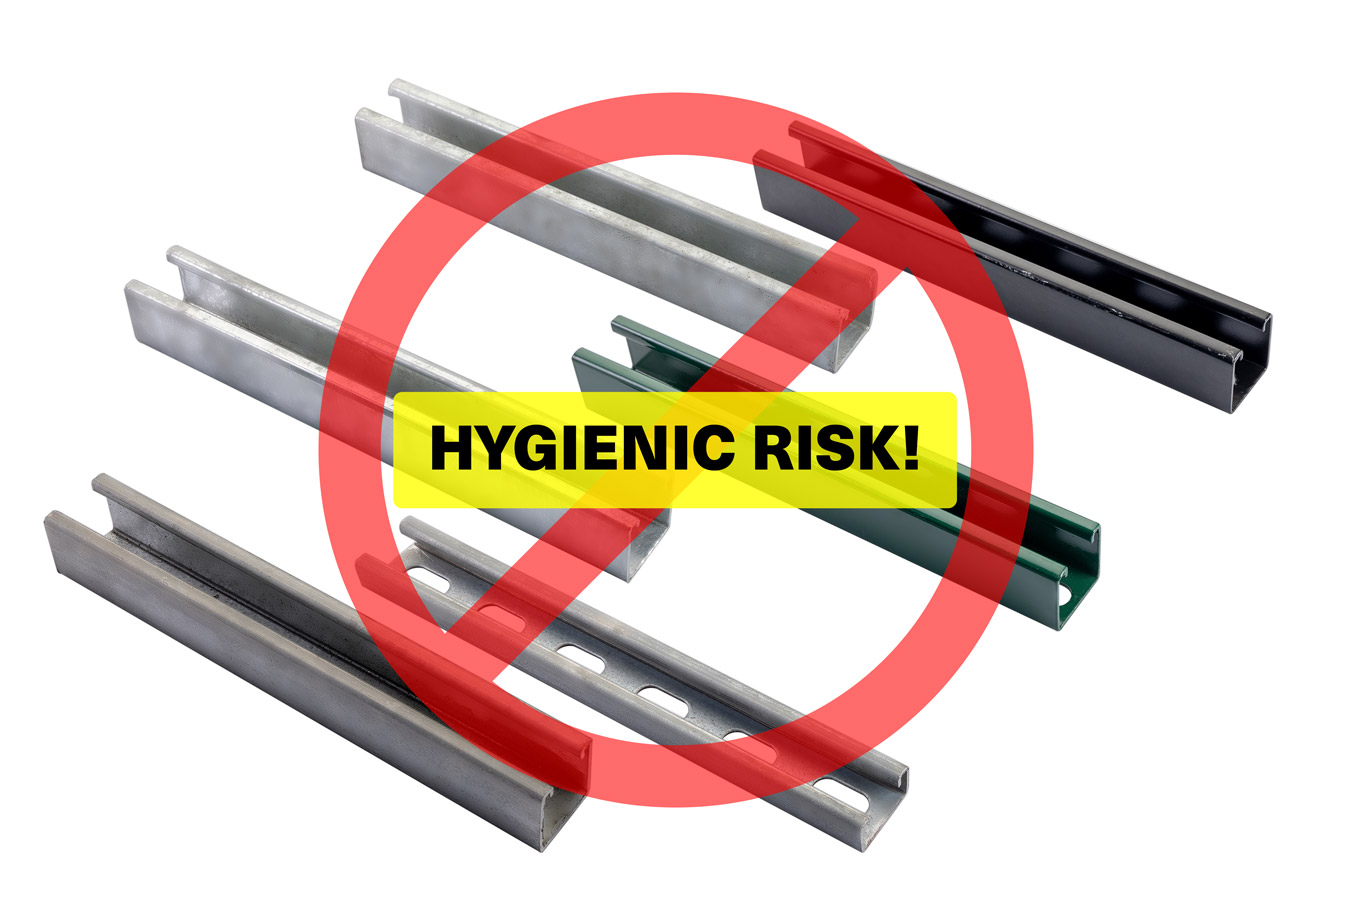 Warning Sign over Traditional Struts as Contamination Risks